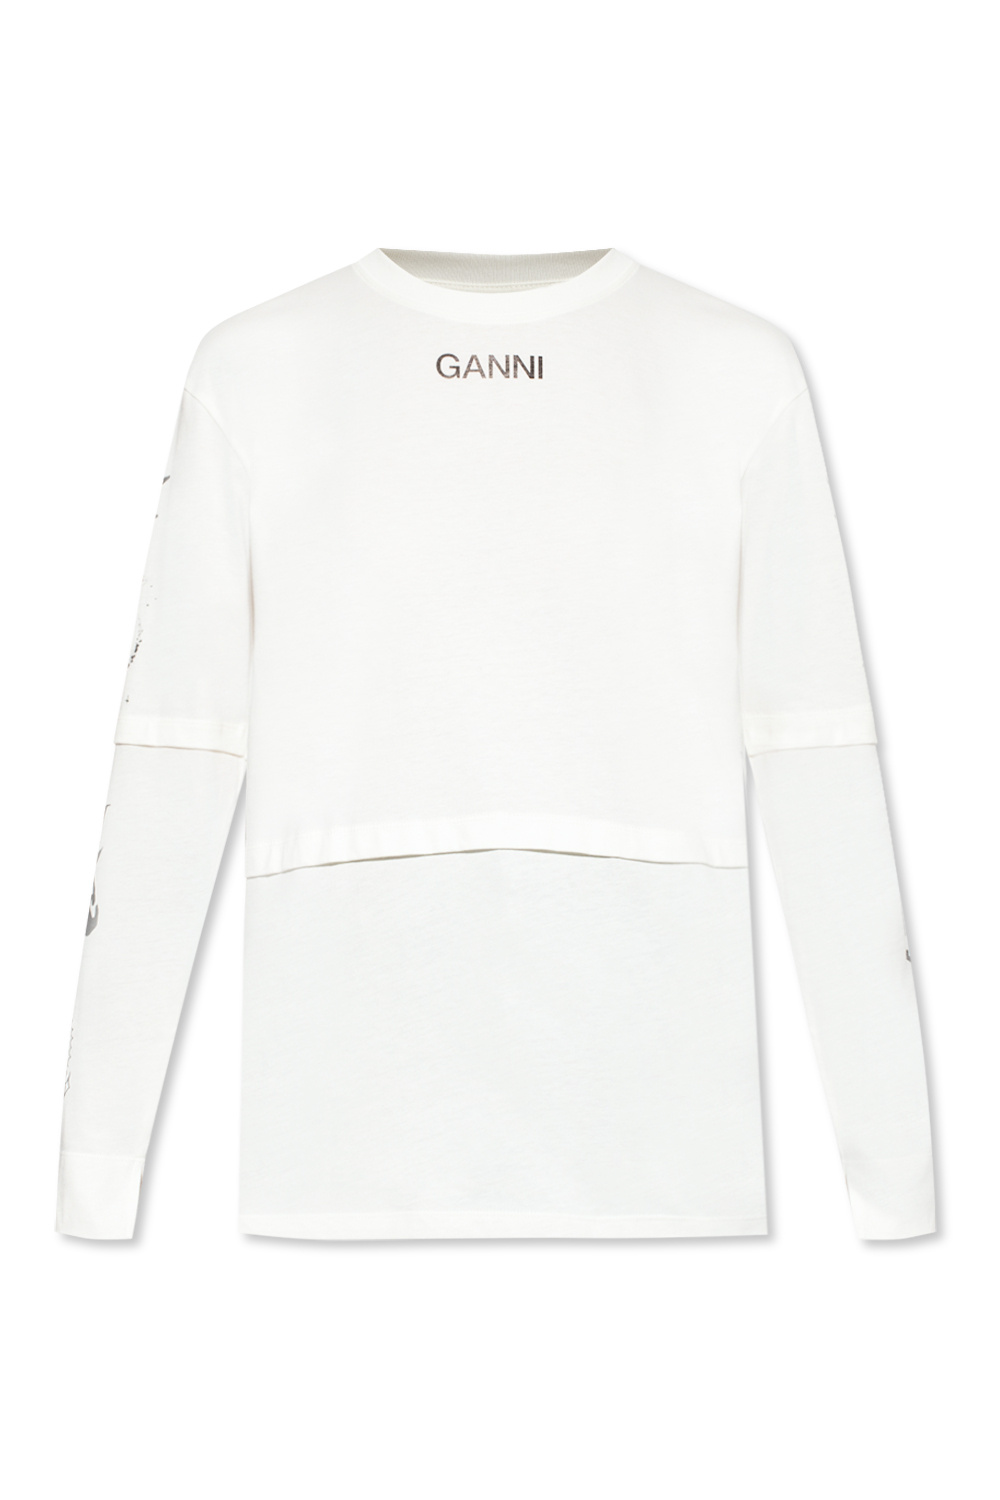 Ganni courreges heart beat print t shirt item